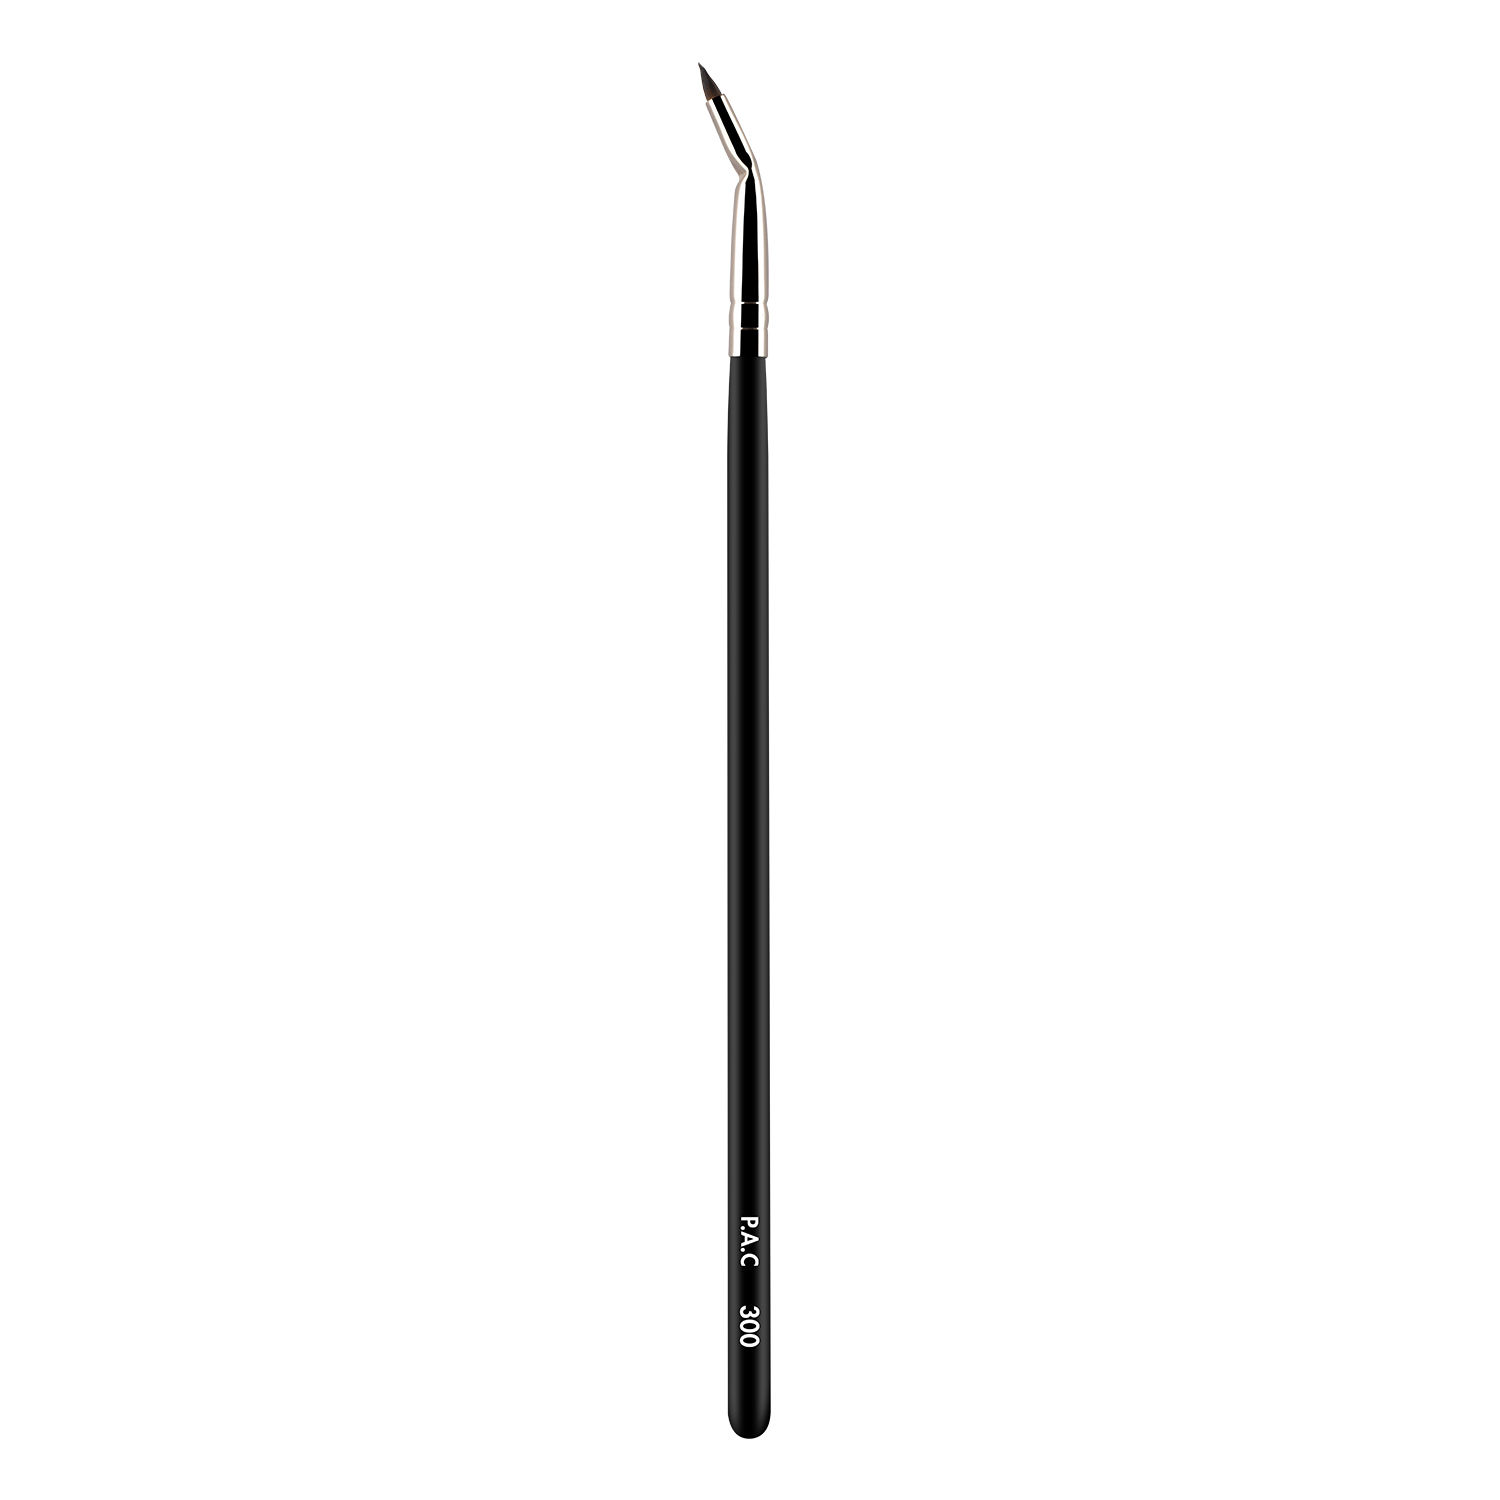 PAC Eyeliner Brush - 300